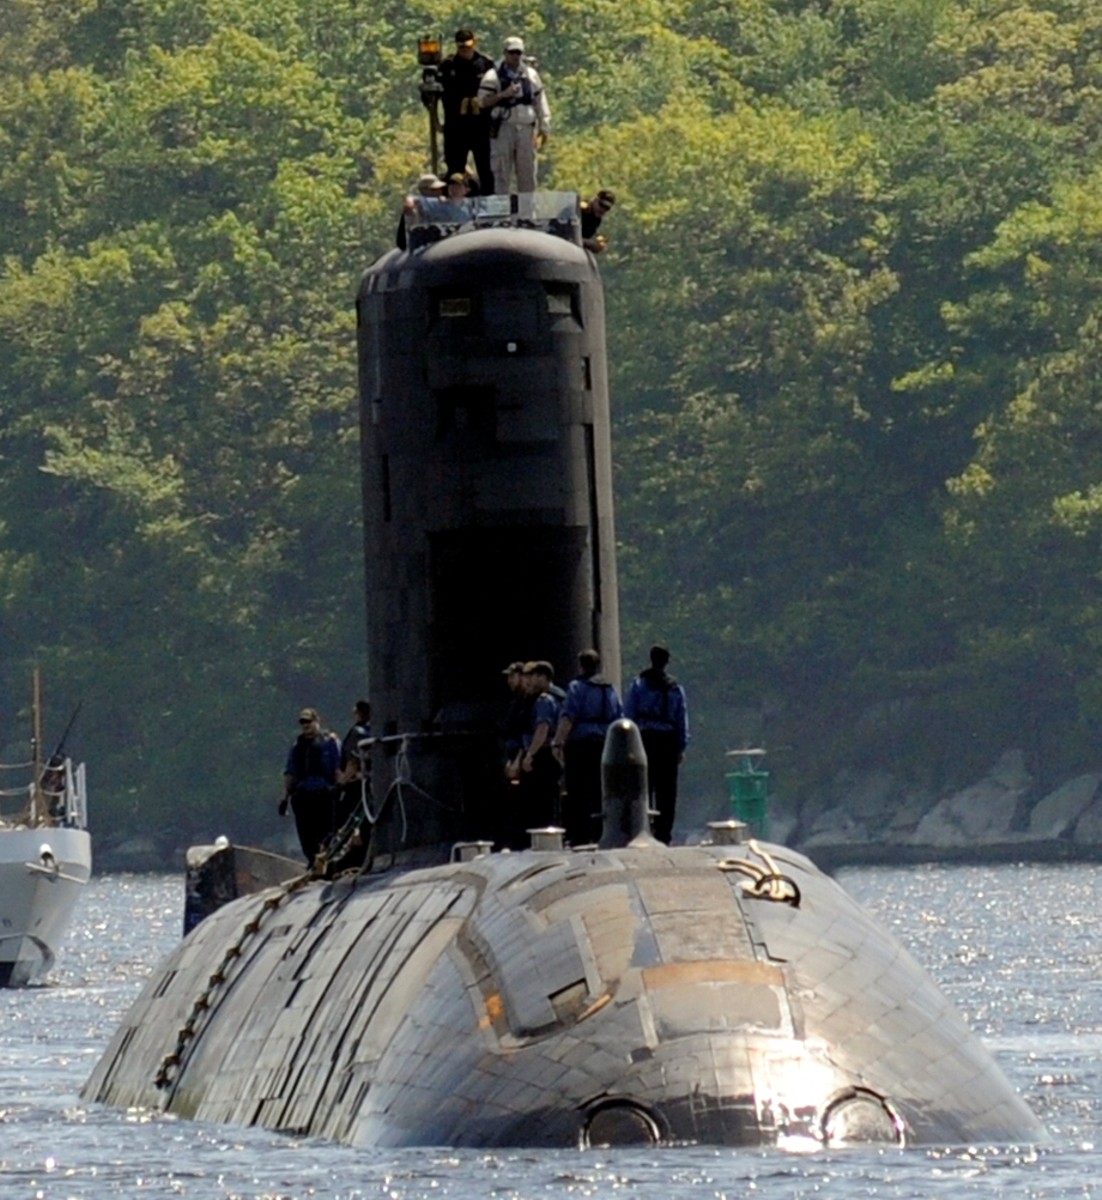 ssk-878 hmcs corner brook victoria upholder class patrol submarine ncsm royal canadian navy 02